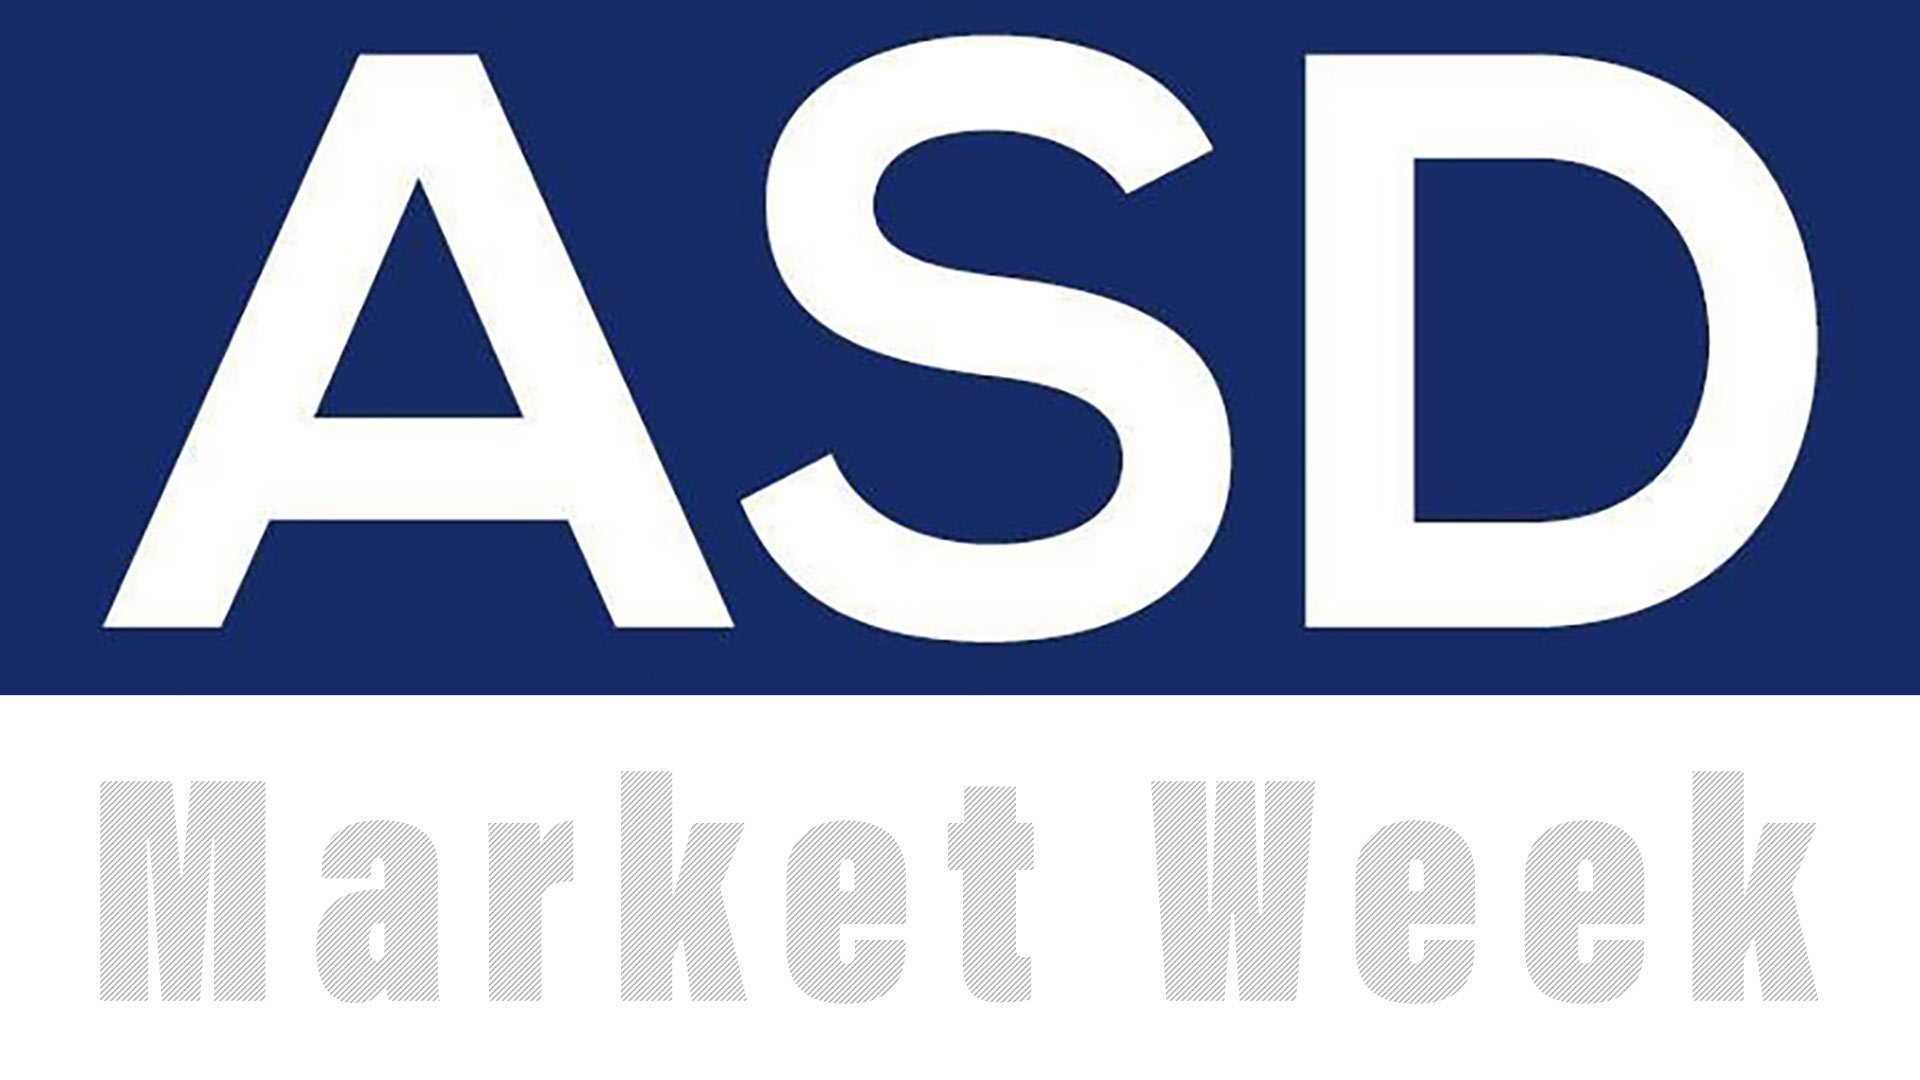 ASD Market Week Amazon Sellers Lawyer Speaking Engagements